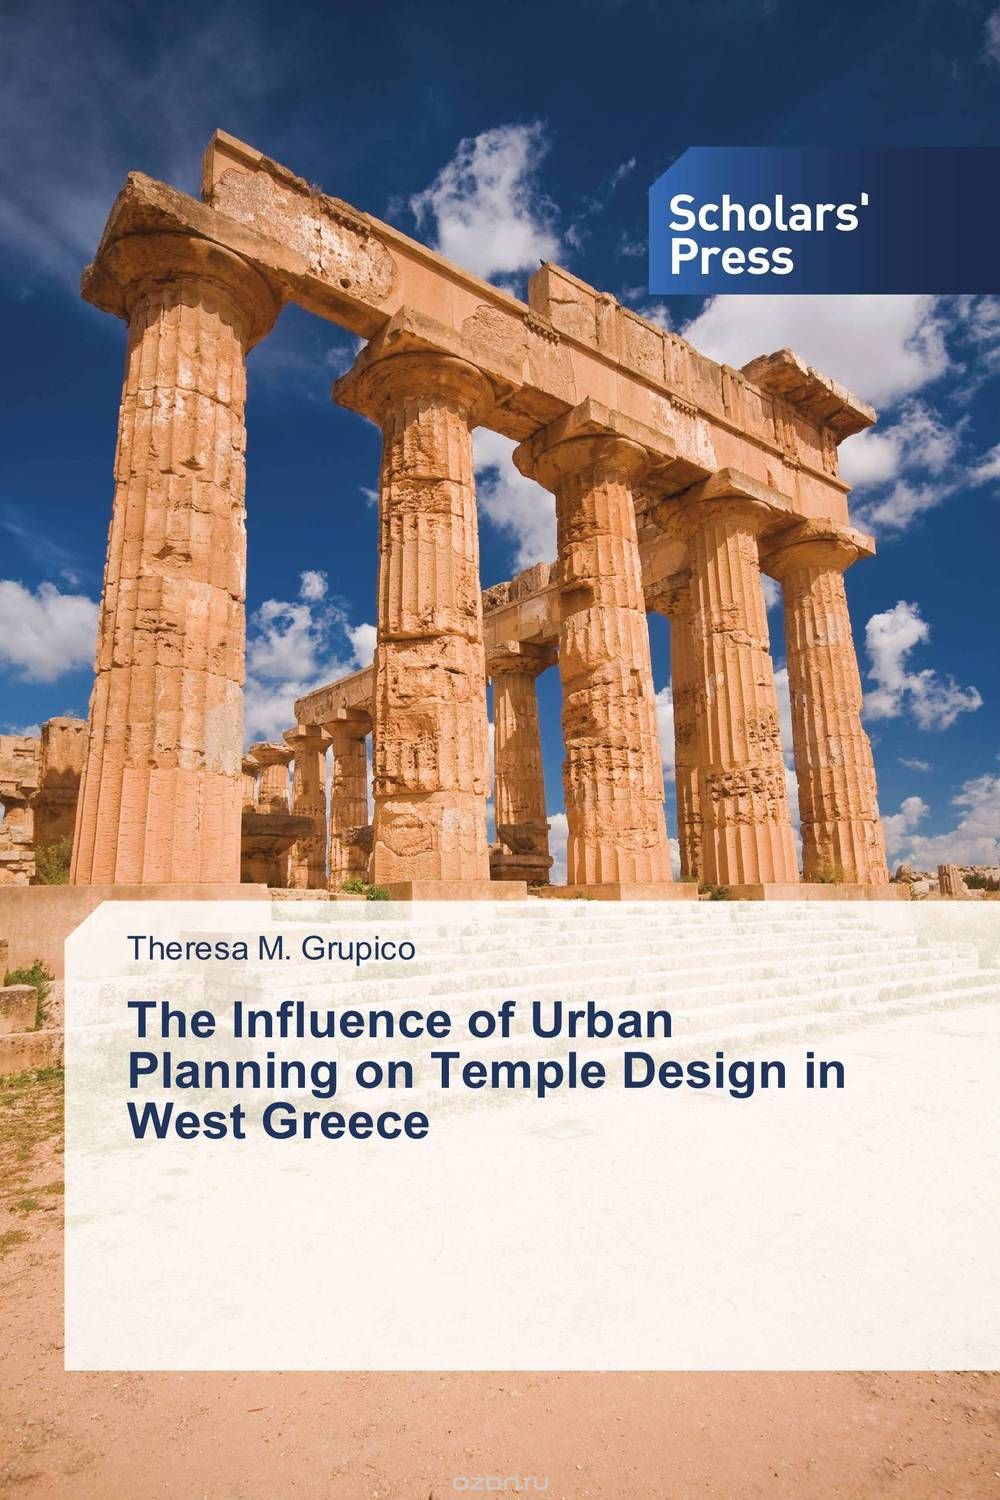 Скачать книгу "The Influence of Urban Planning on Temple Design in West Greece"